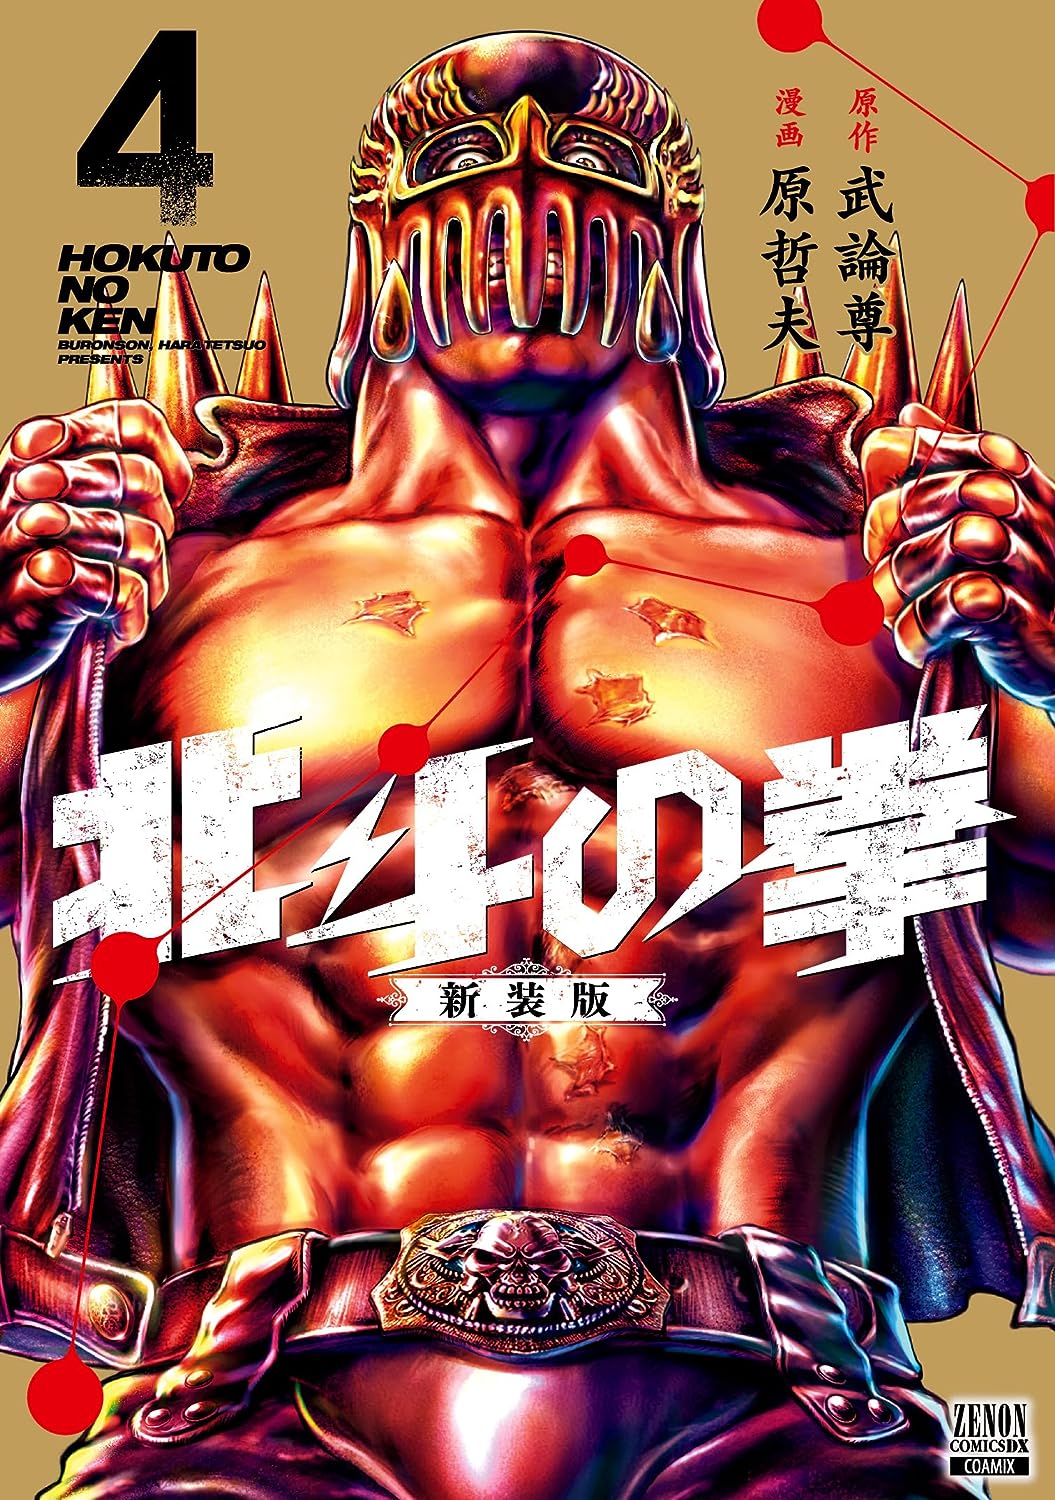 Hokuto no Ken (Fist of the North Star) #4  / Comic